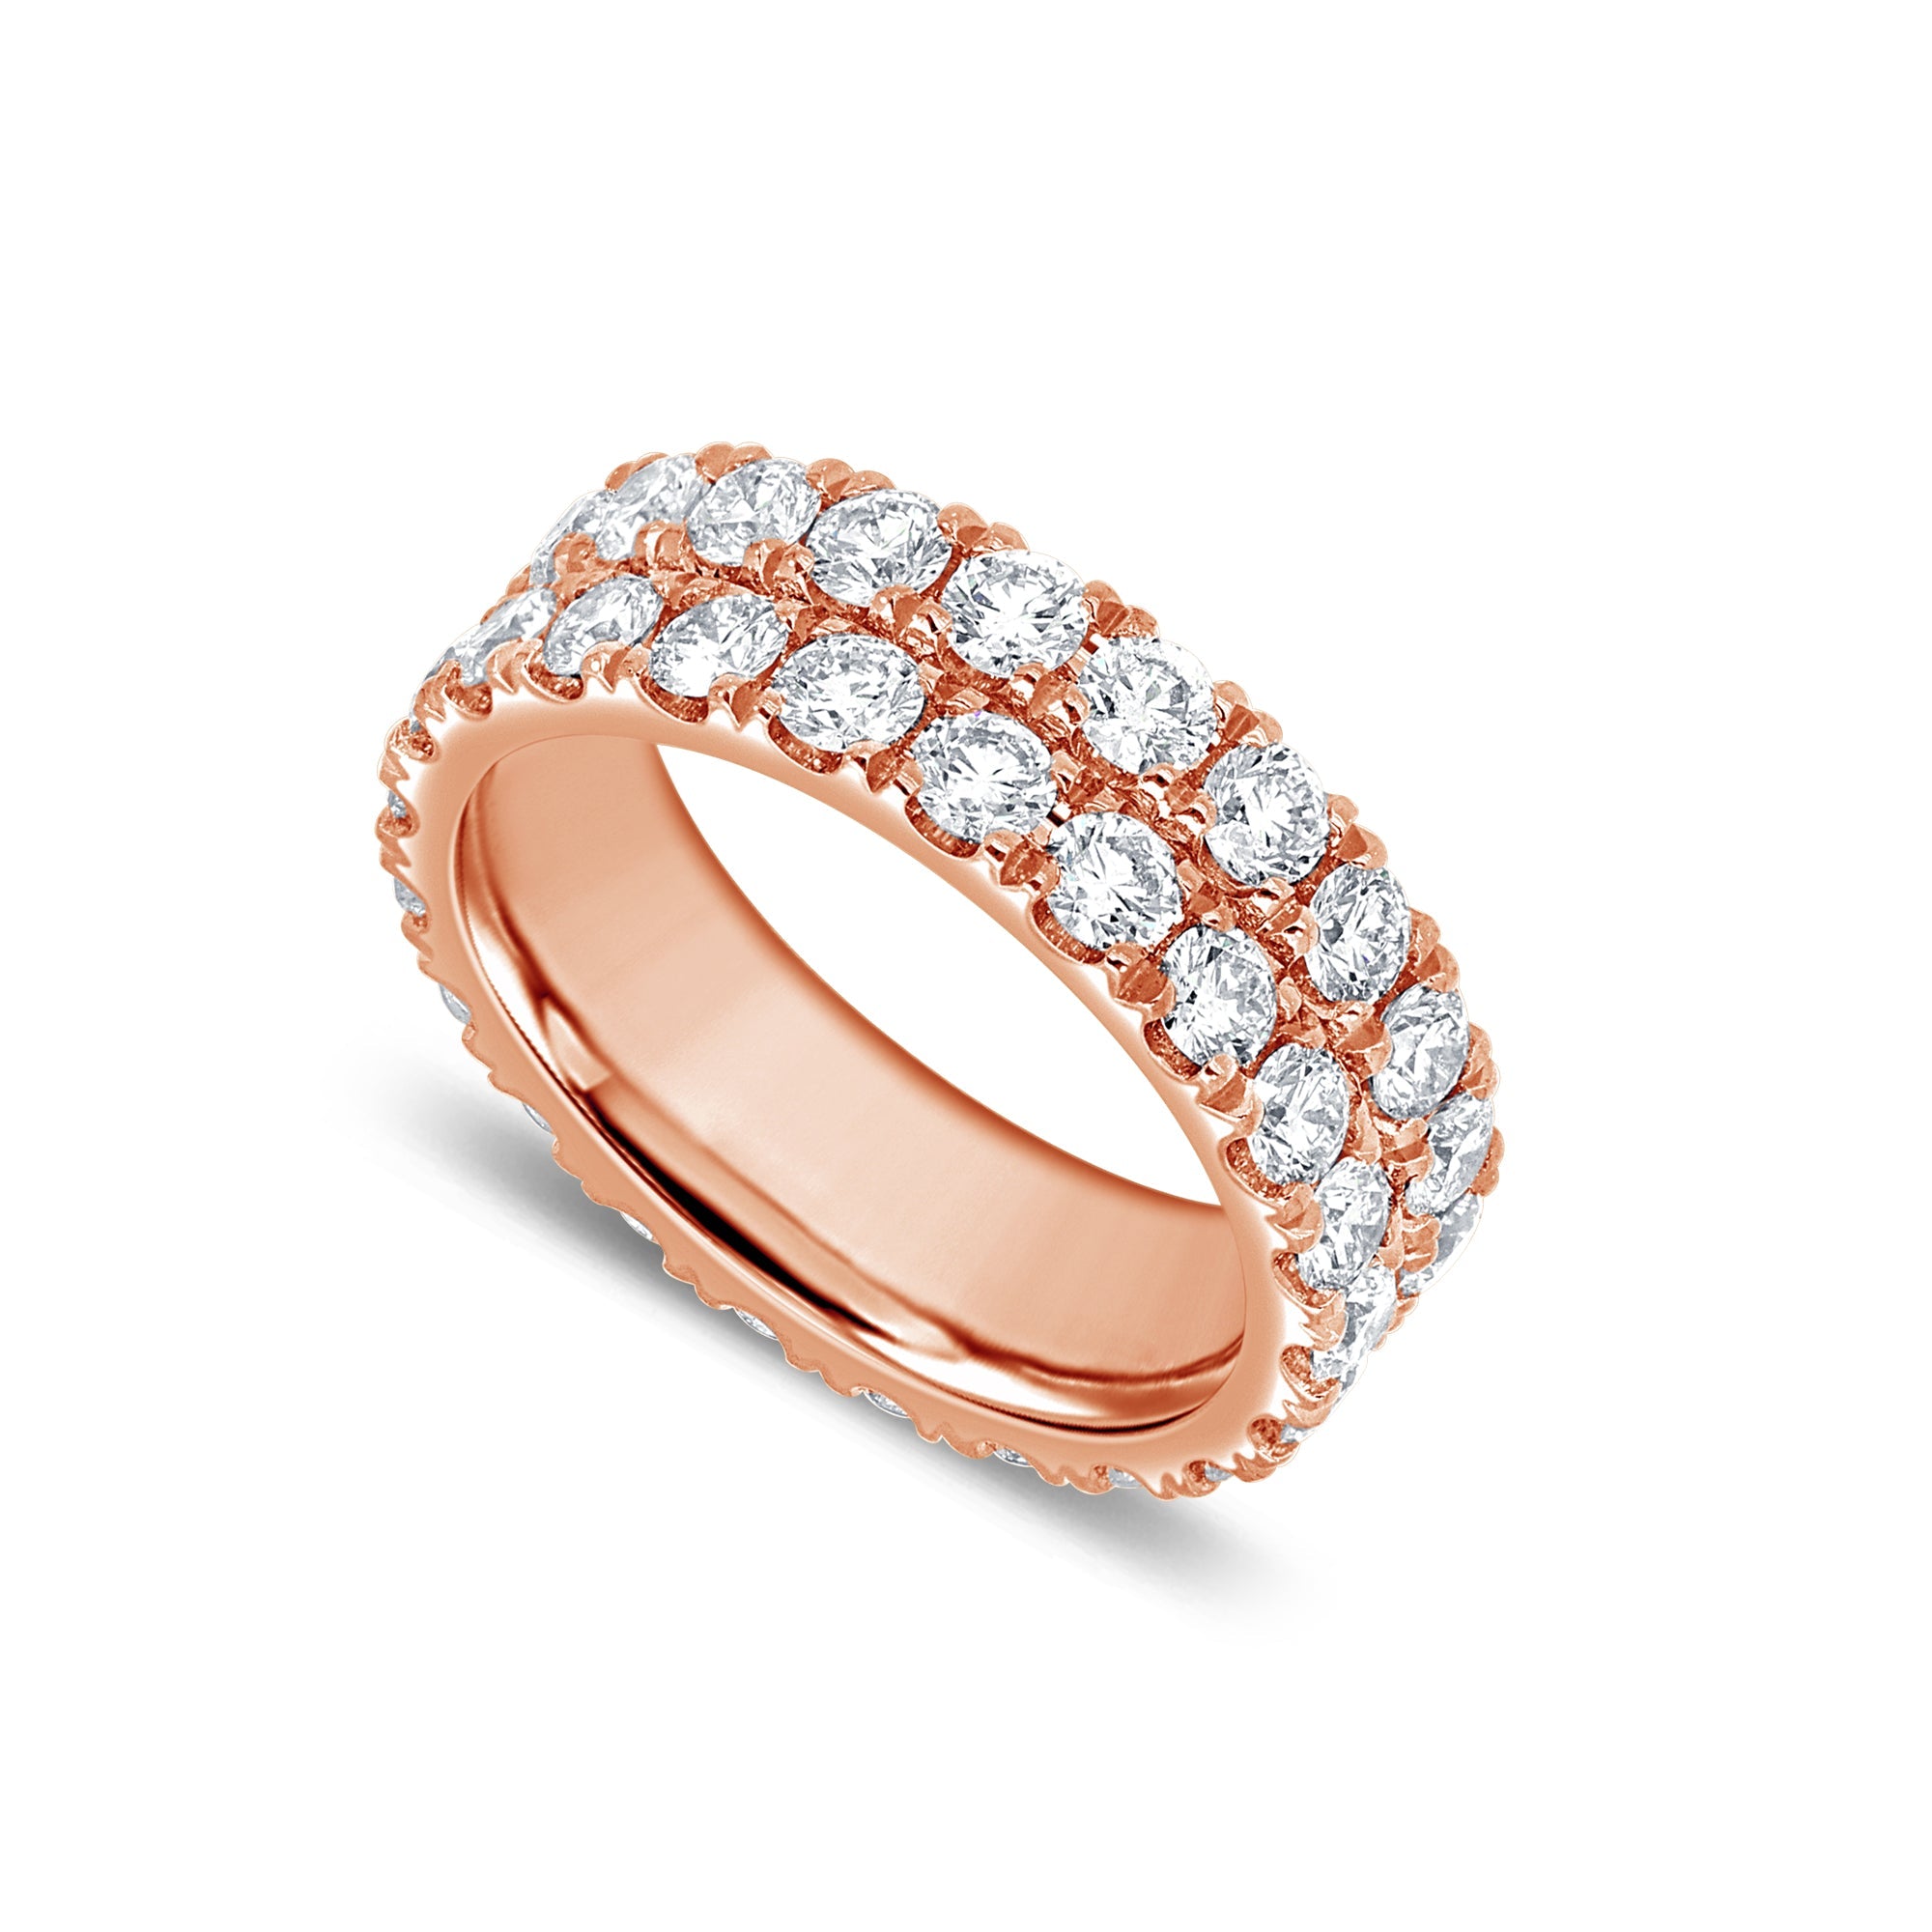 Christina 11 Carats Oval Cut Diamond Engagement Ring | Nekta New York